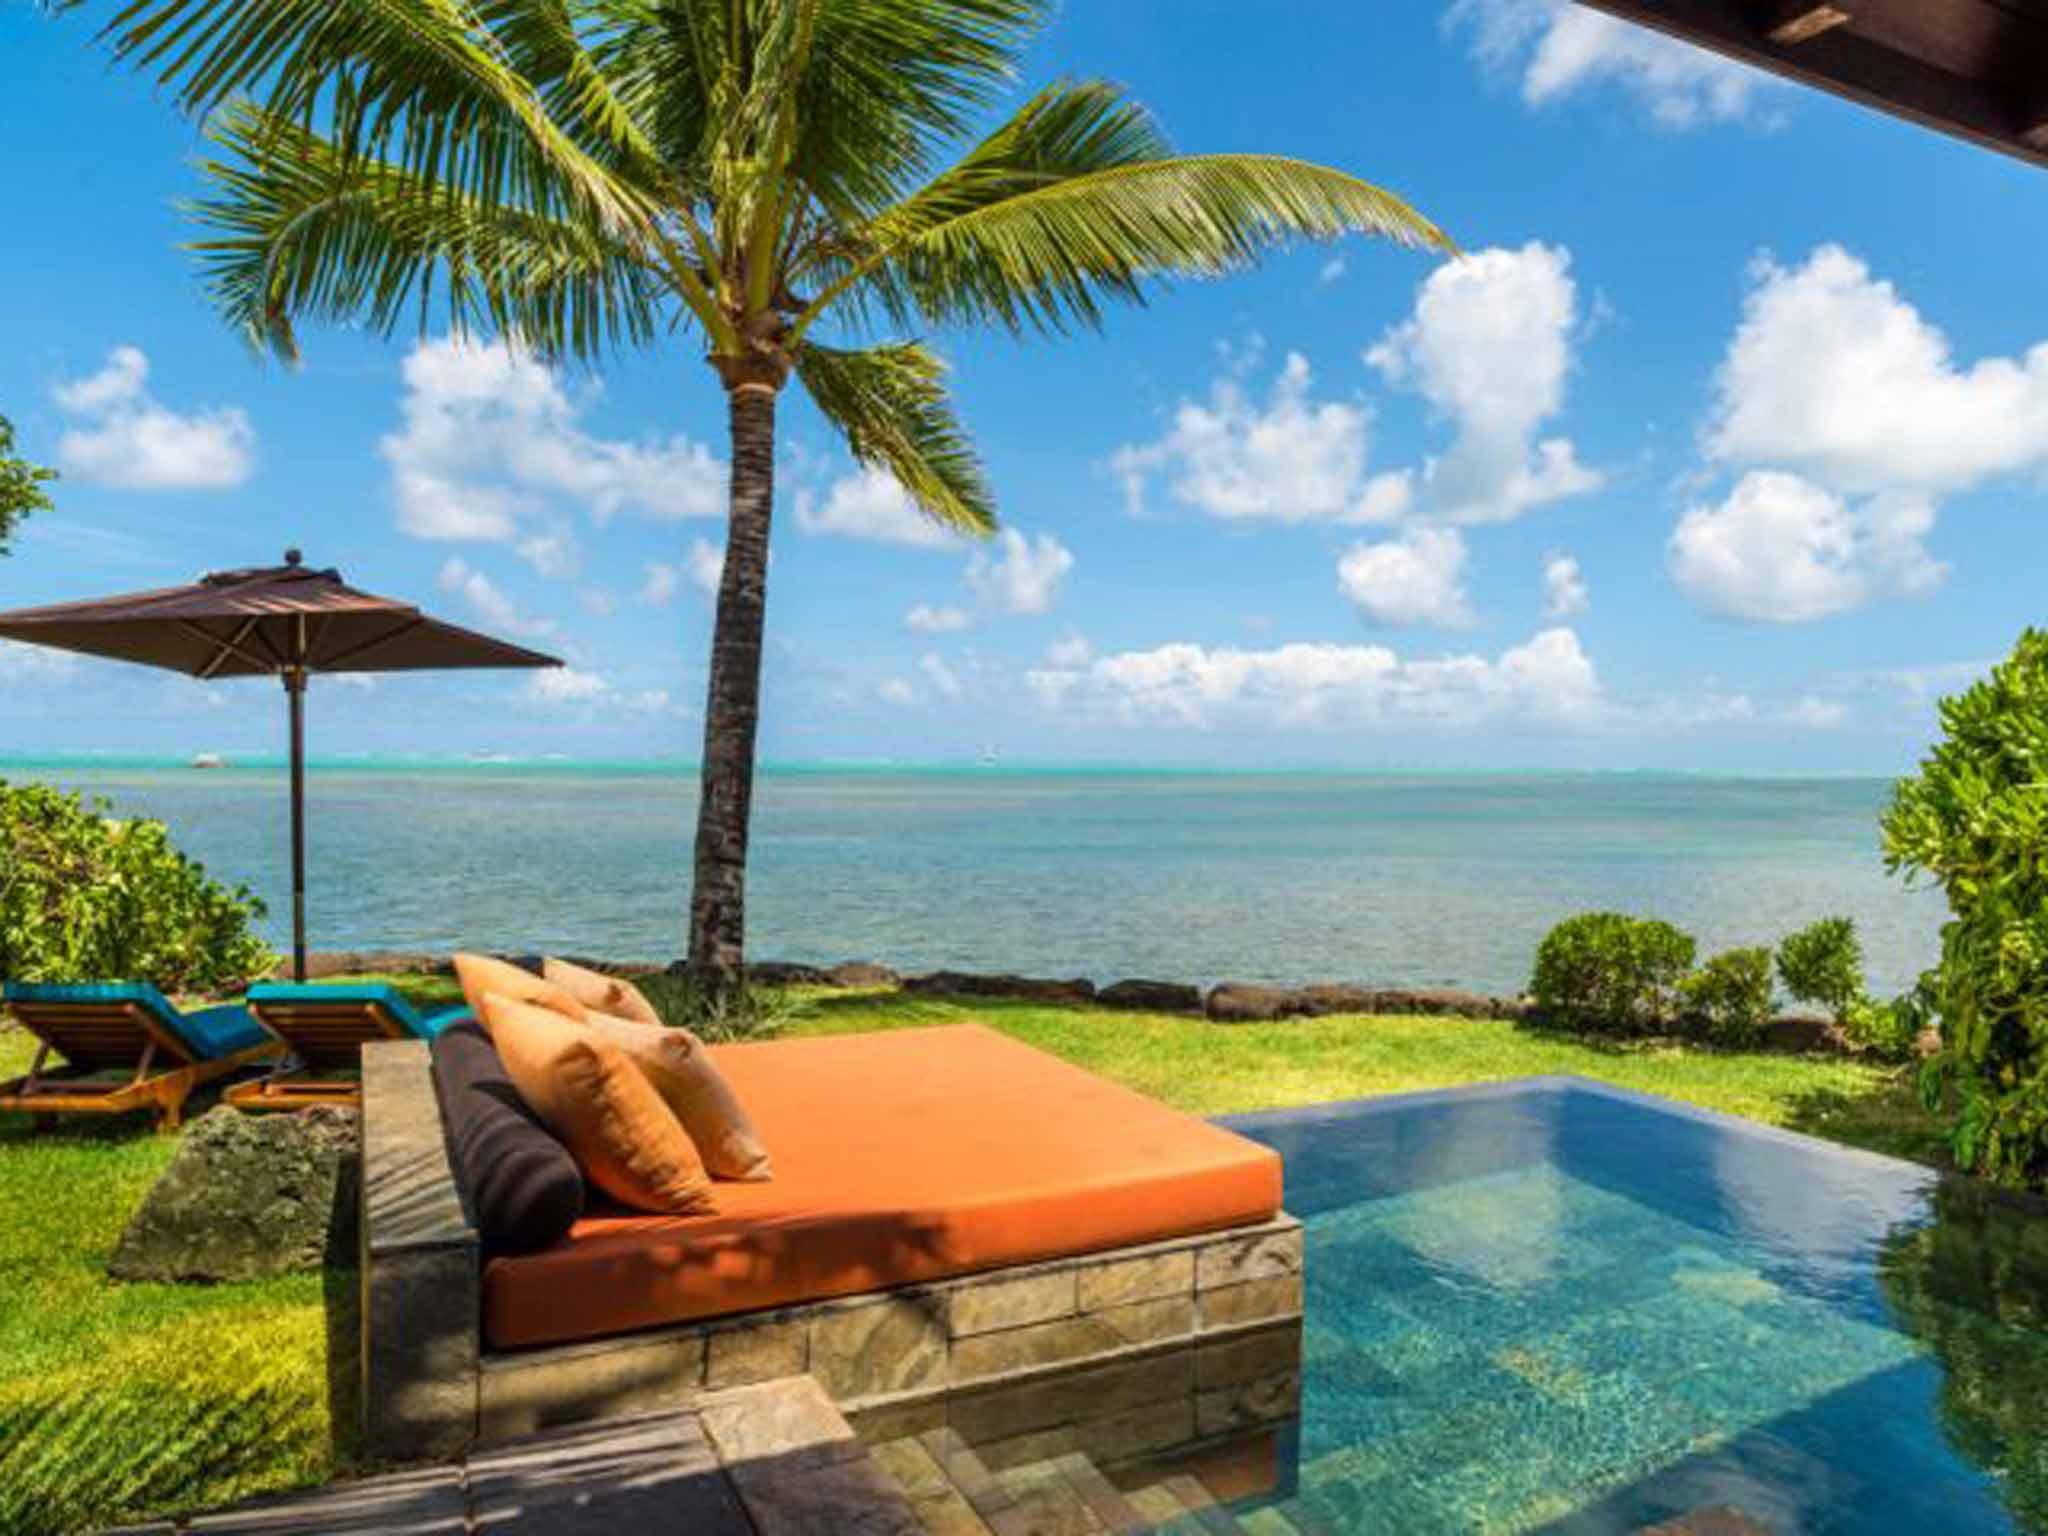 Views of the Four Seasons Resort Mauritius at Anahita